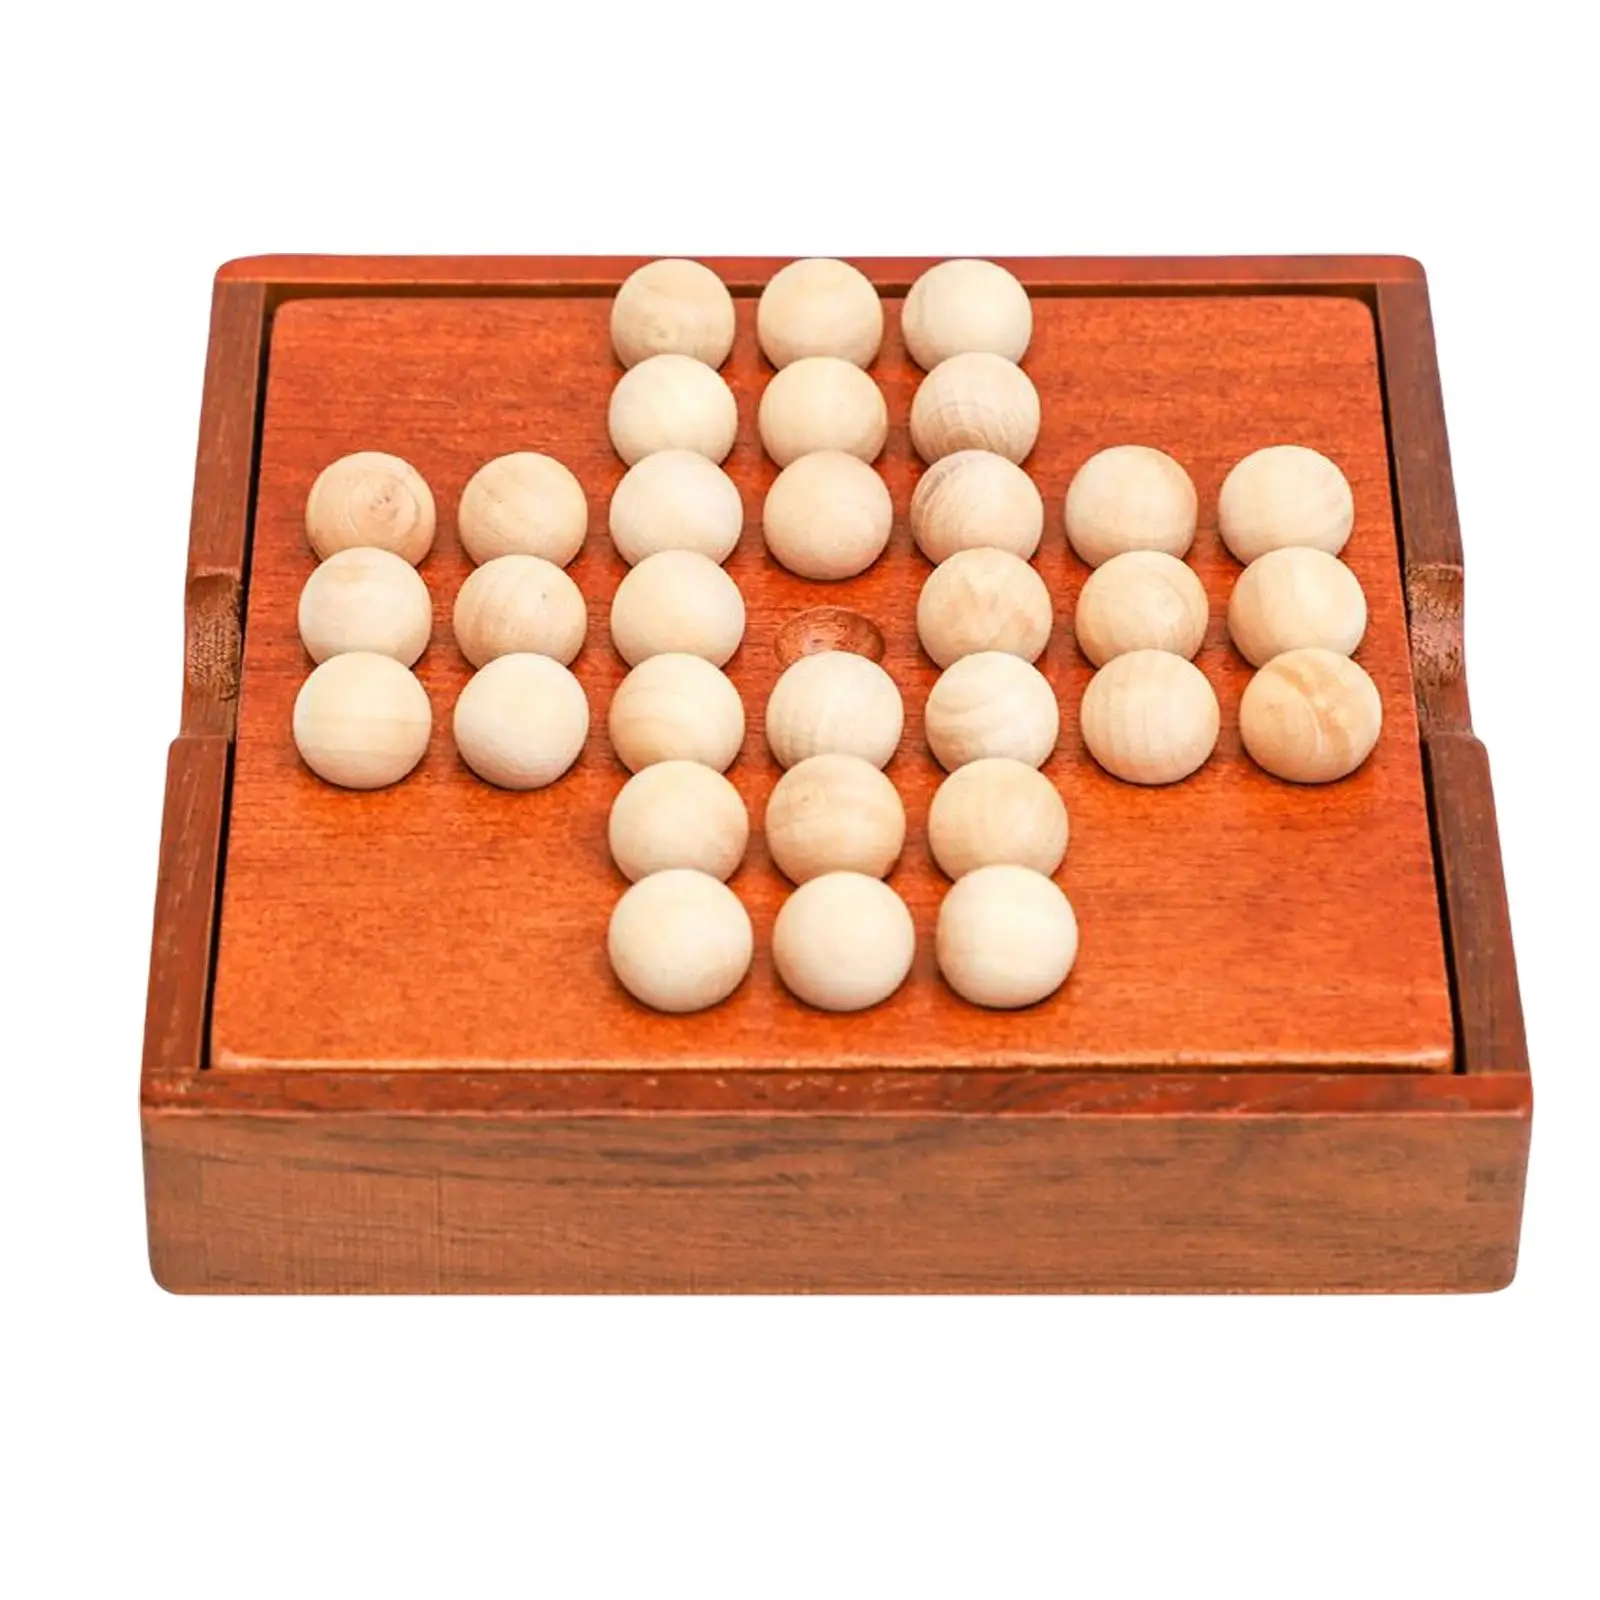 Wooden Solitaire Board Game Intellectual Development Teaser IQ Puzzle